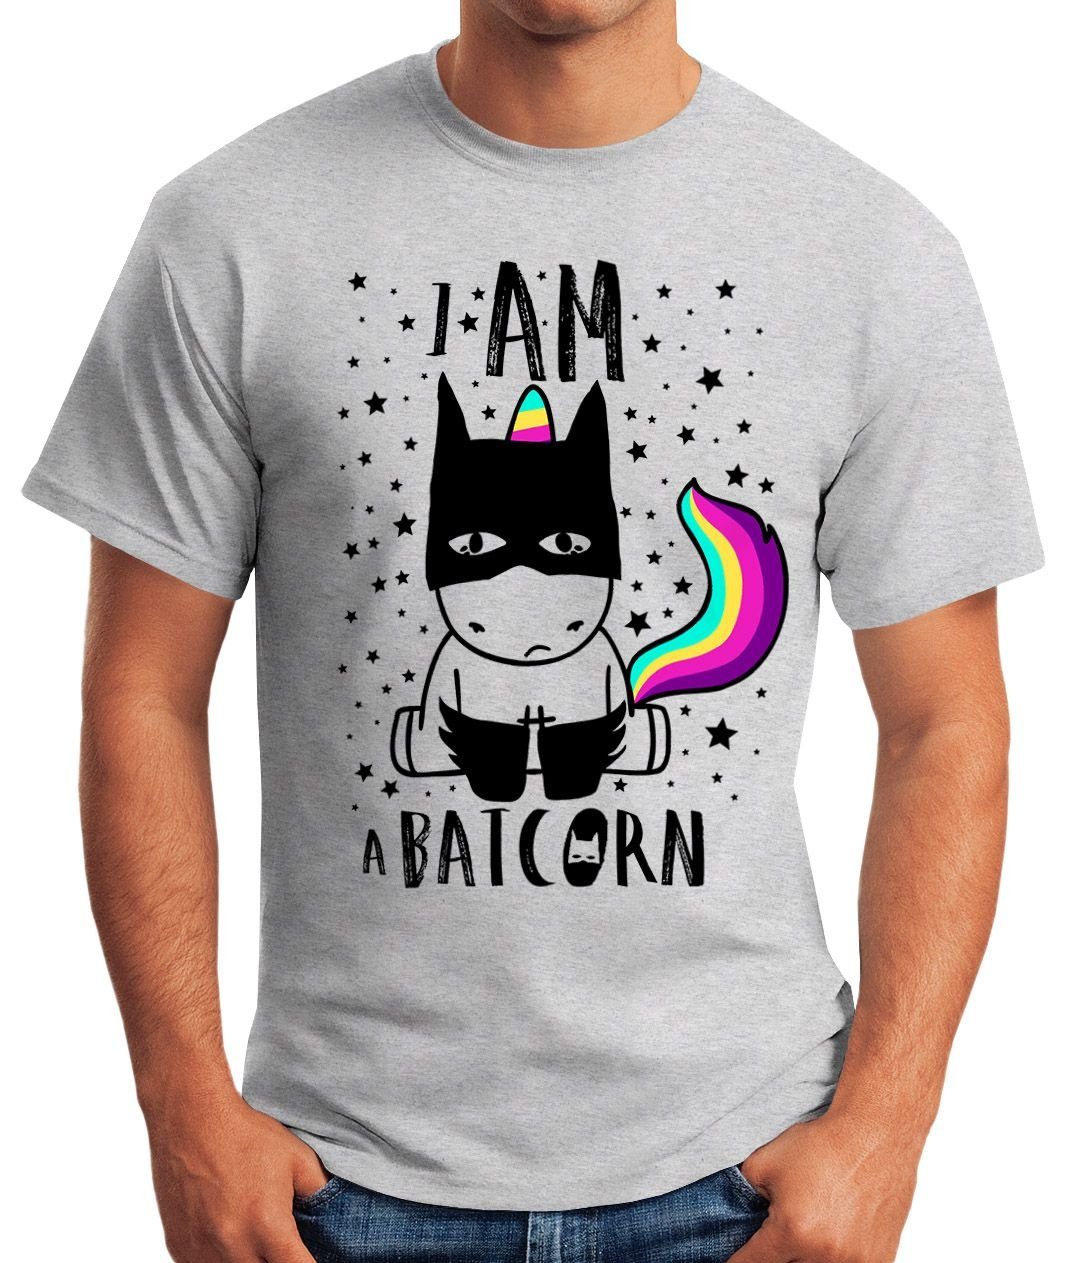 Print-Shirt Moonworks® Print Shirt MoonWorks Batcorn grau Fun-Shirt mit Unicorn Herren Einhorn